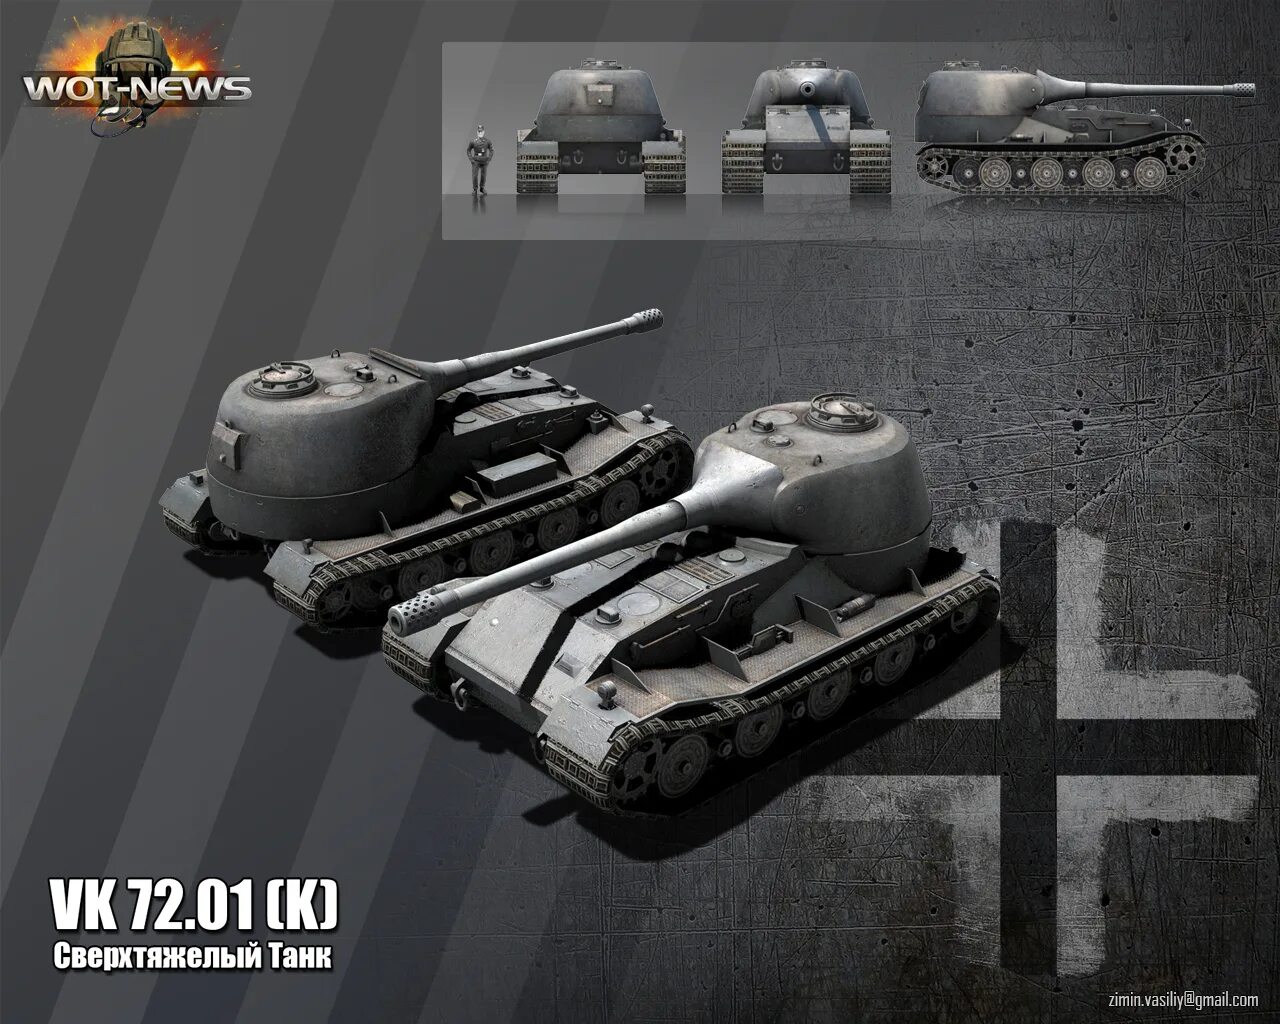 71 2 1 72 3 71. Vk.72.01k Tank. ВК 72 01 К. Танк ВК 72 01 К. Тапко Лев World of Tanks.